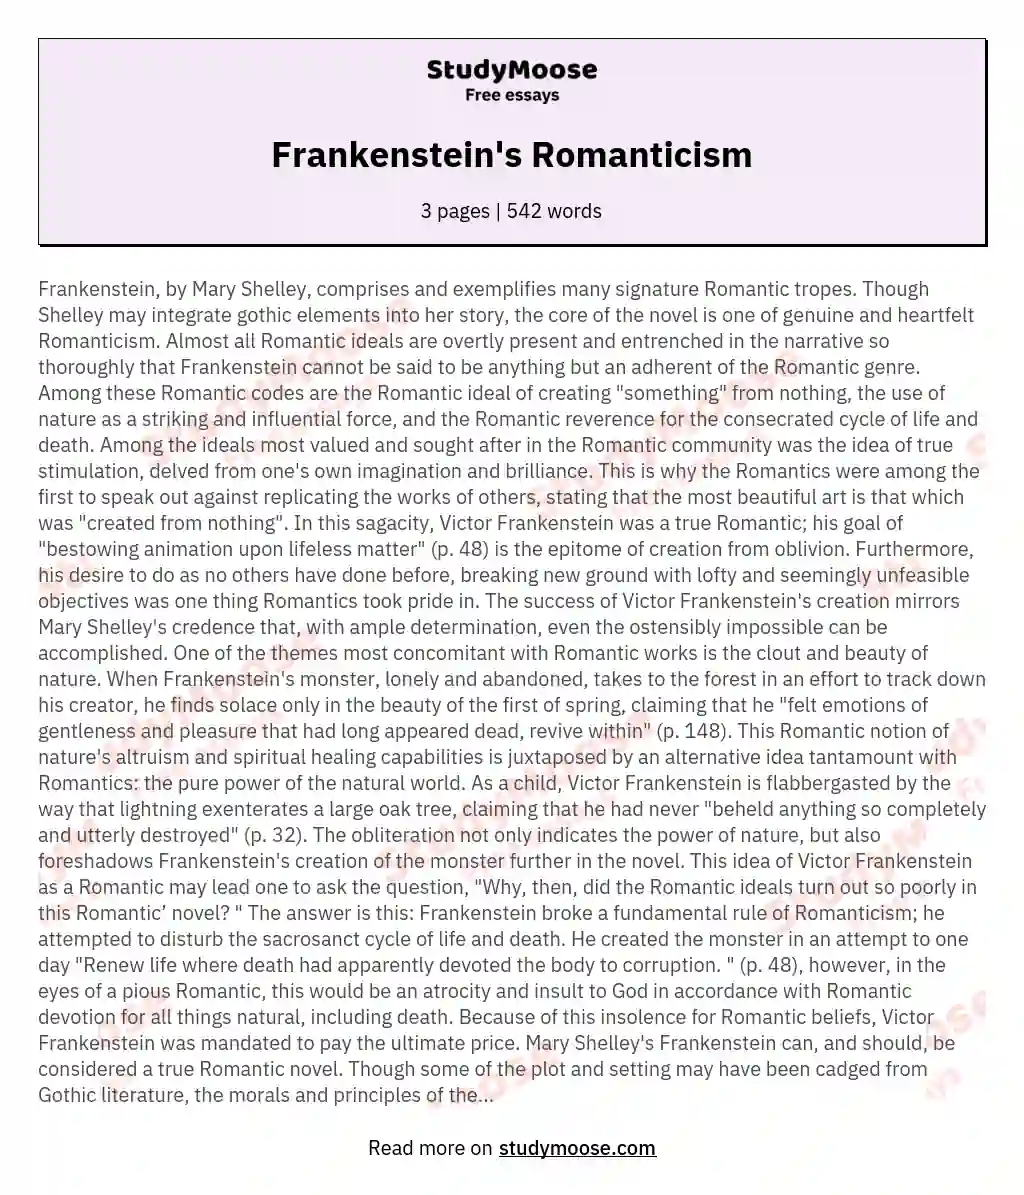 Frankenstein's Romanticism essay